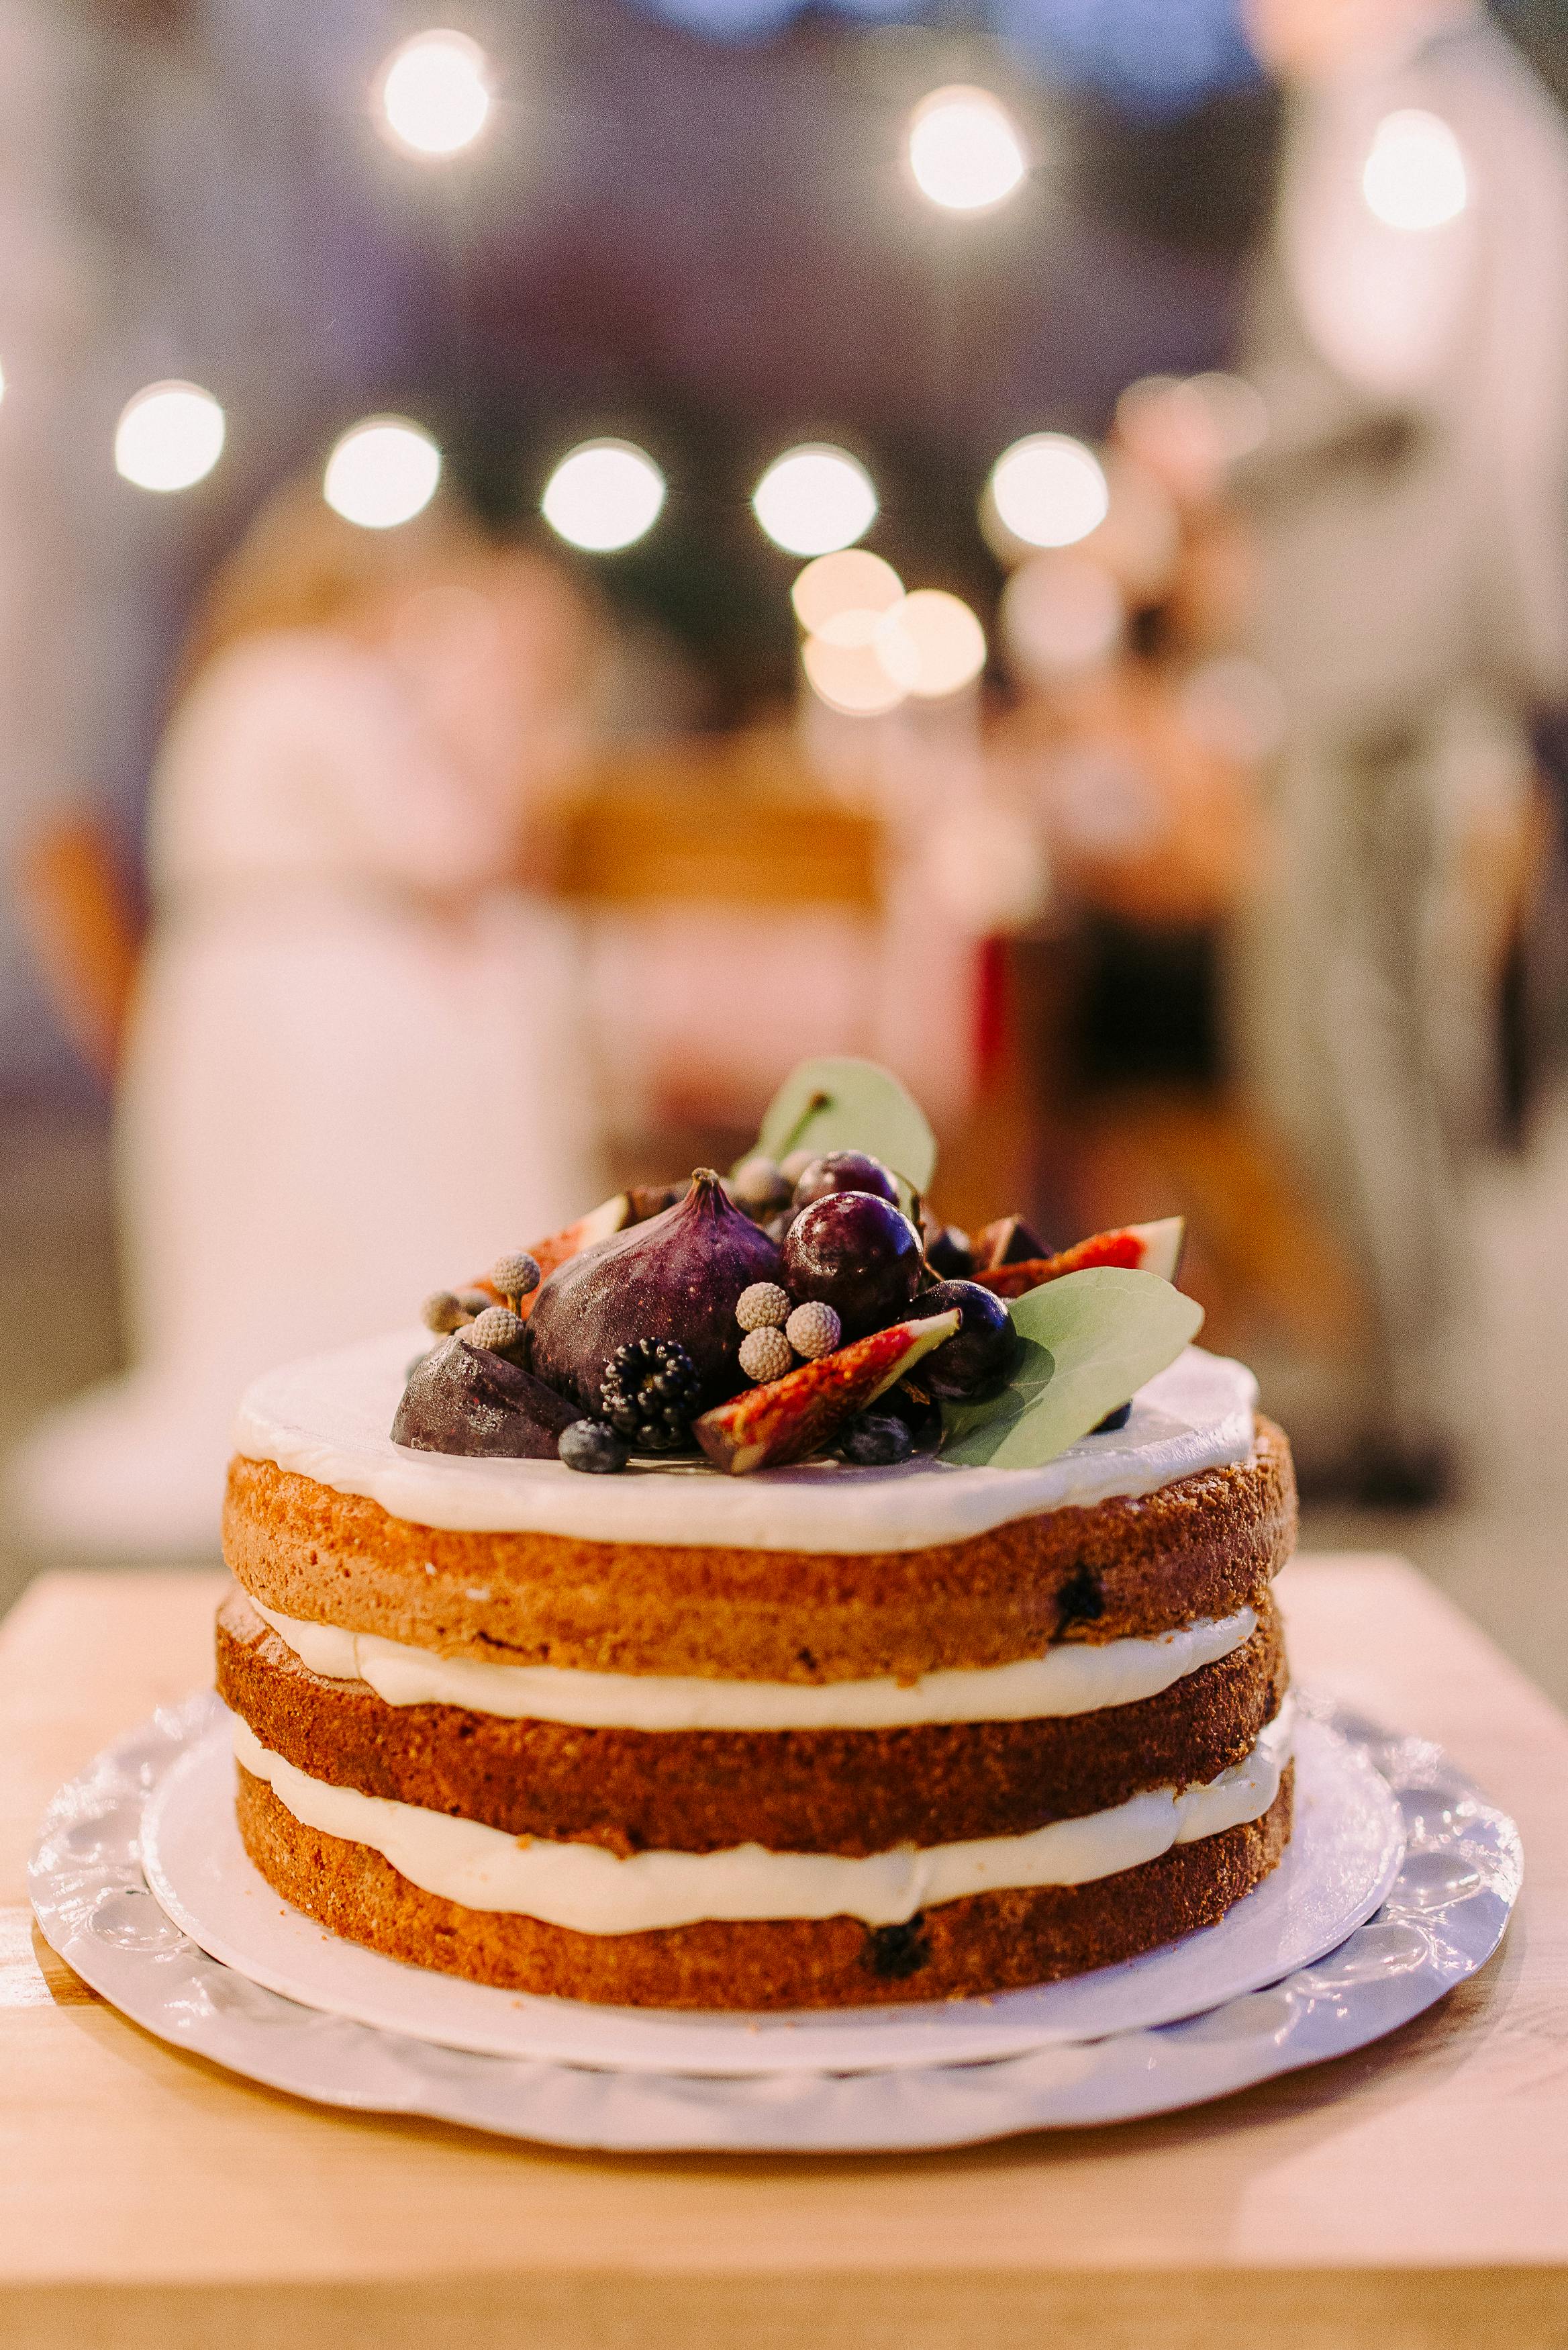 Wedding Cake Gallery - View My Wonderful Wedding Cakes Here